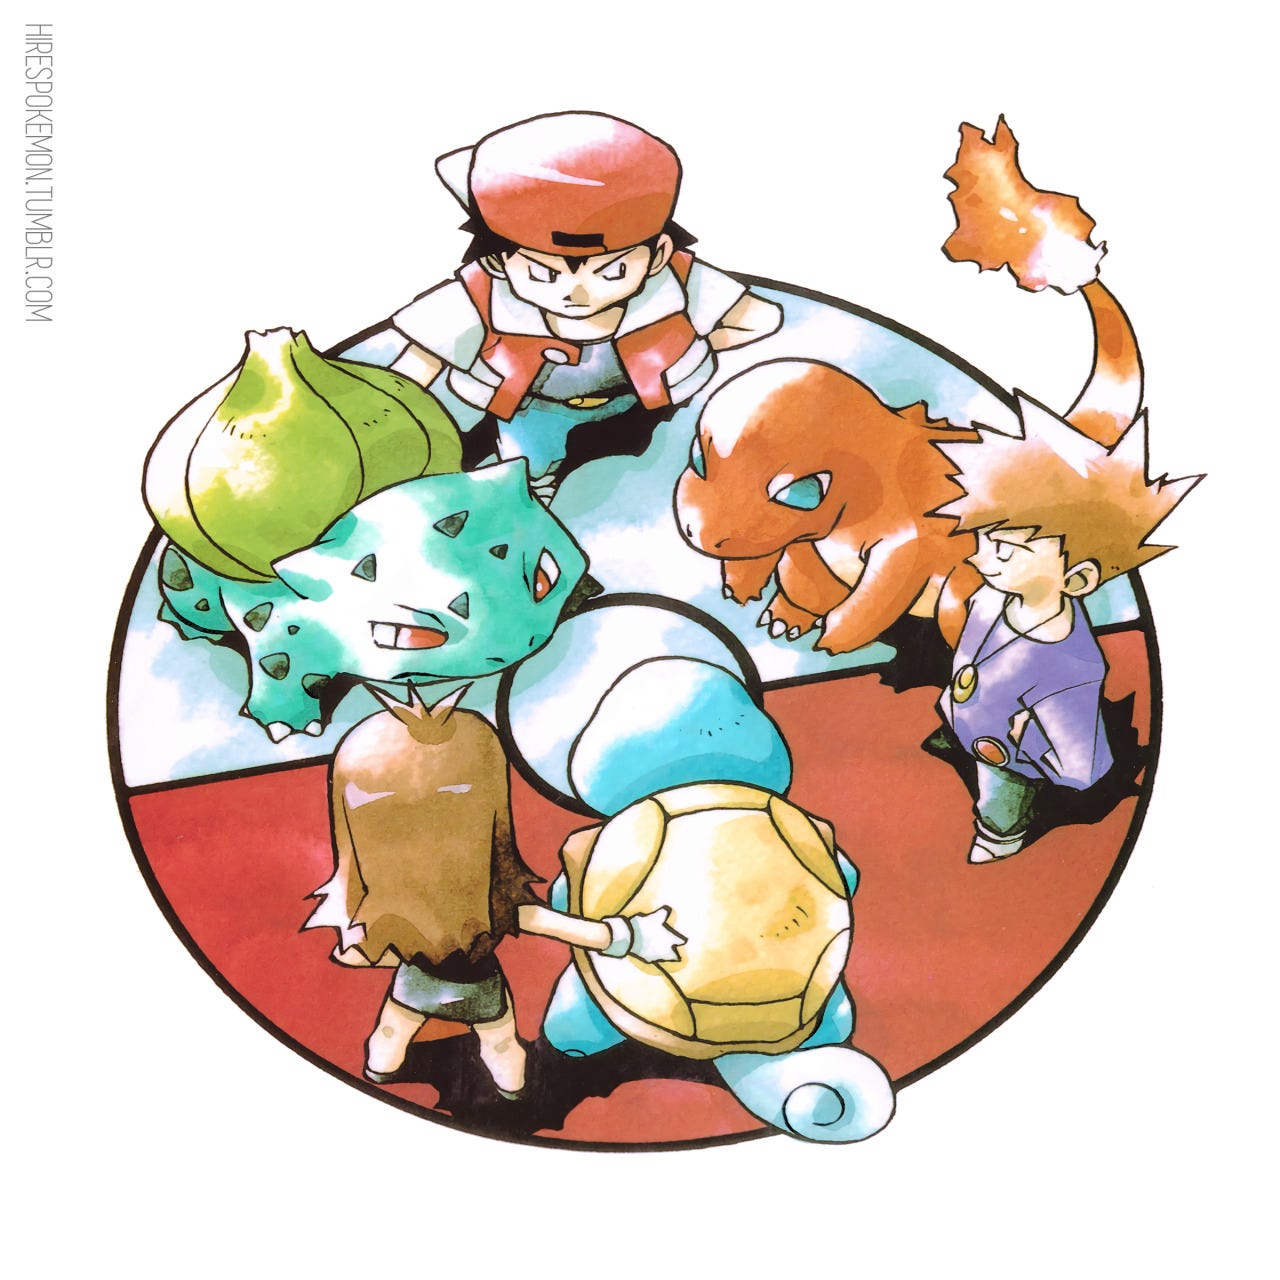 Zange on Game Jolt: Pokémon Trainer Red from Pokémon! ! I